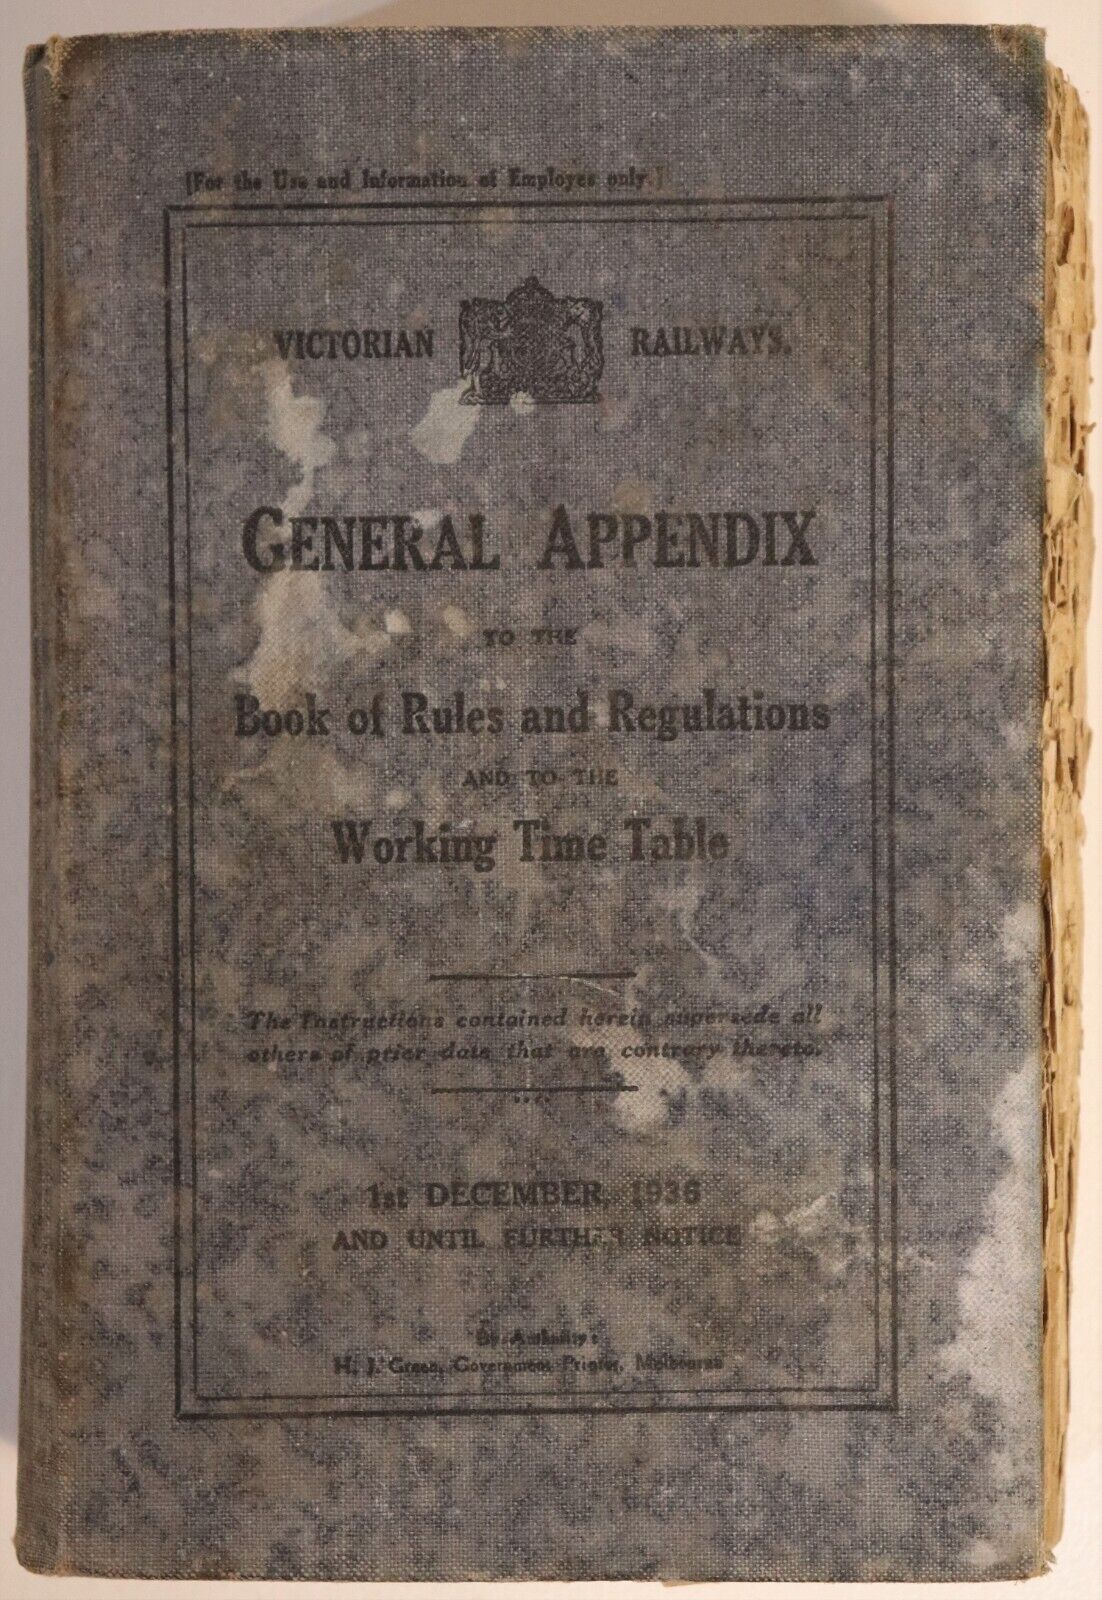 Victorian Railways General Appendix - 1936 - Australia Train Books